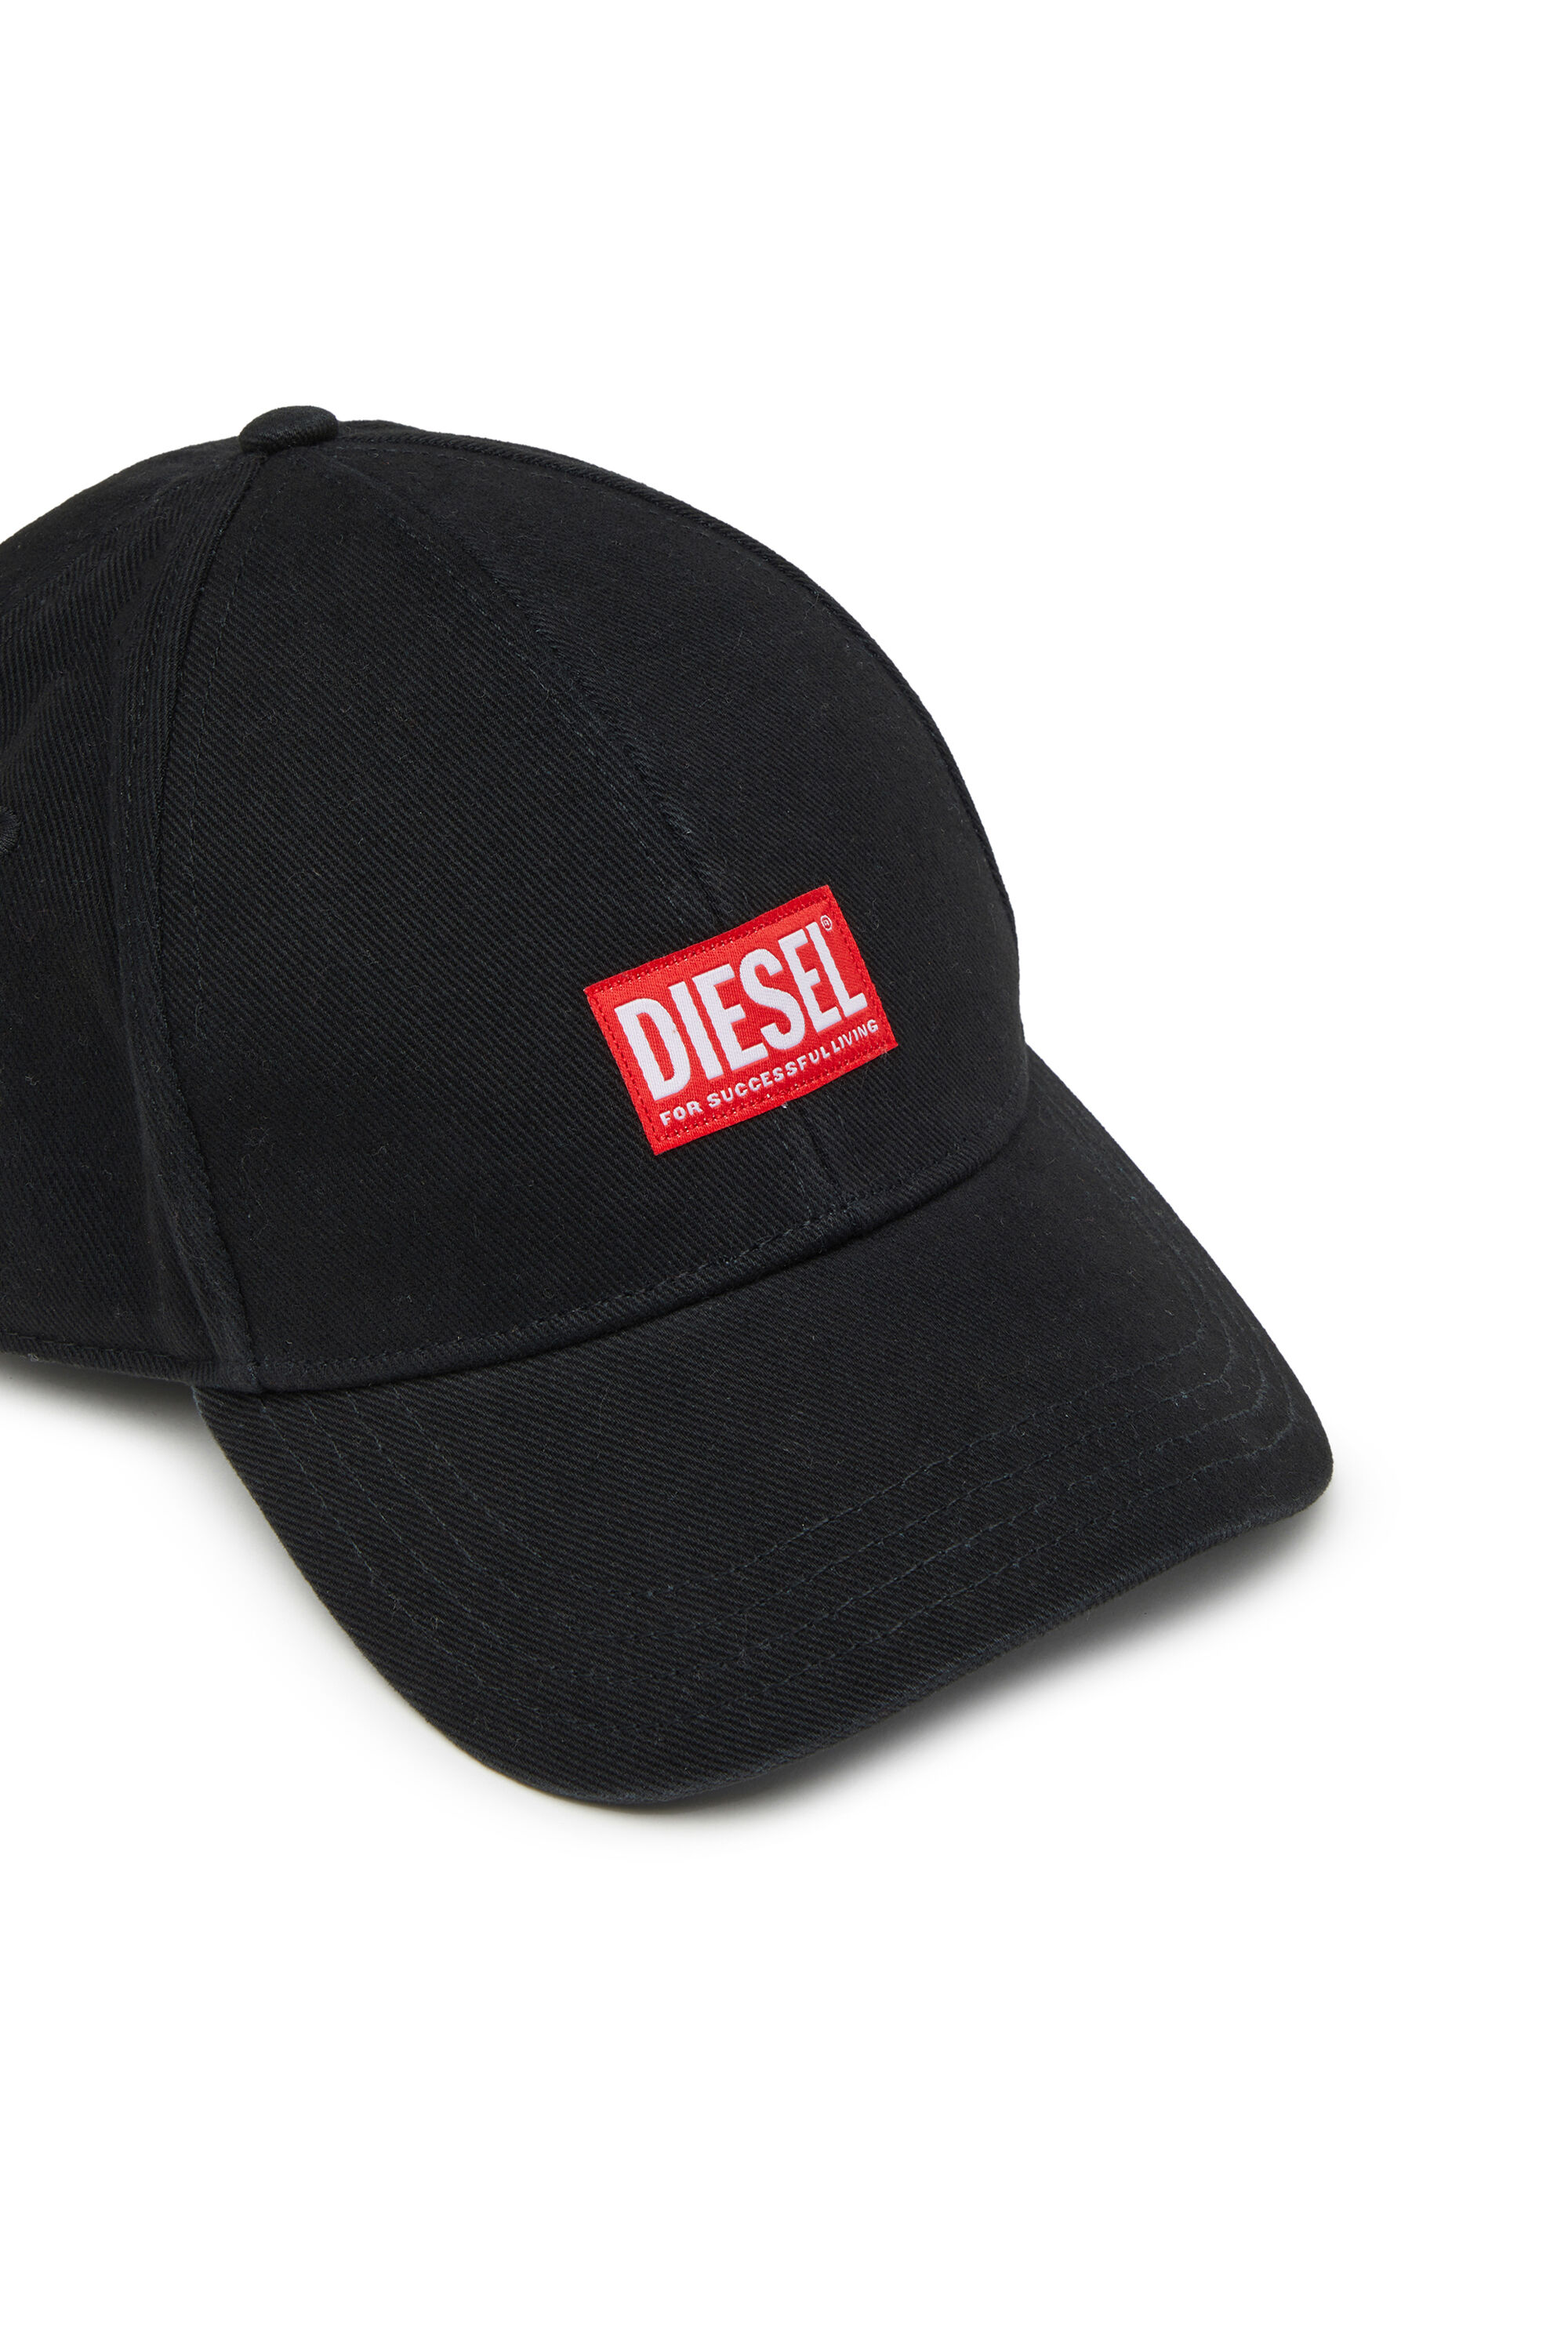 Diesel - CORRY-JACQ-WASH, Black - Image 3